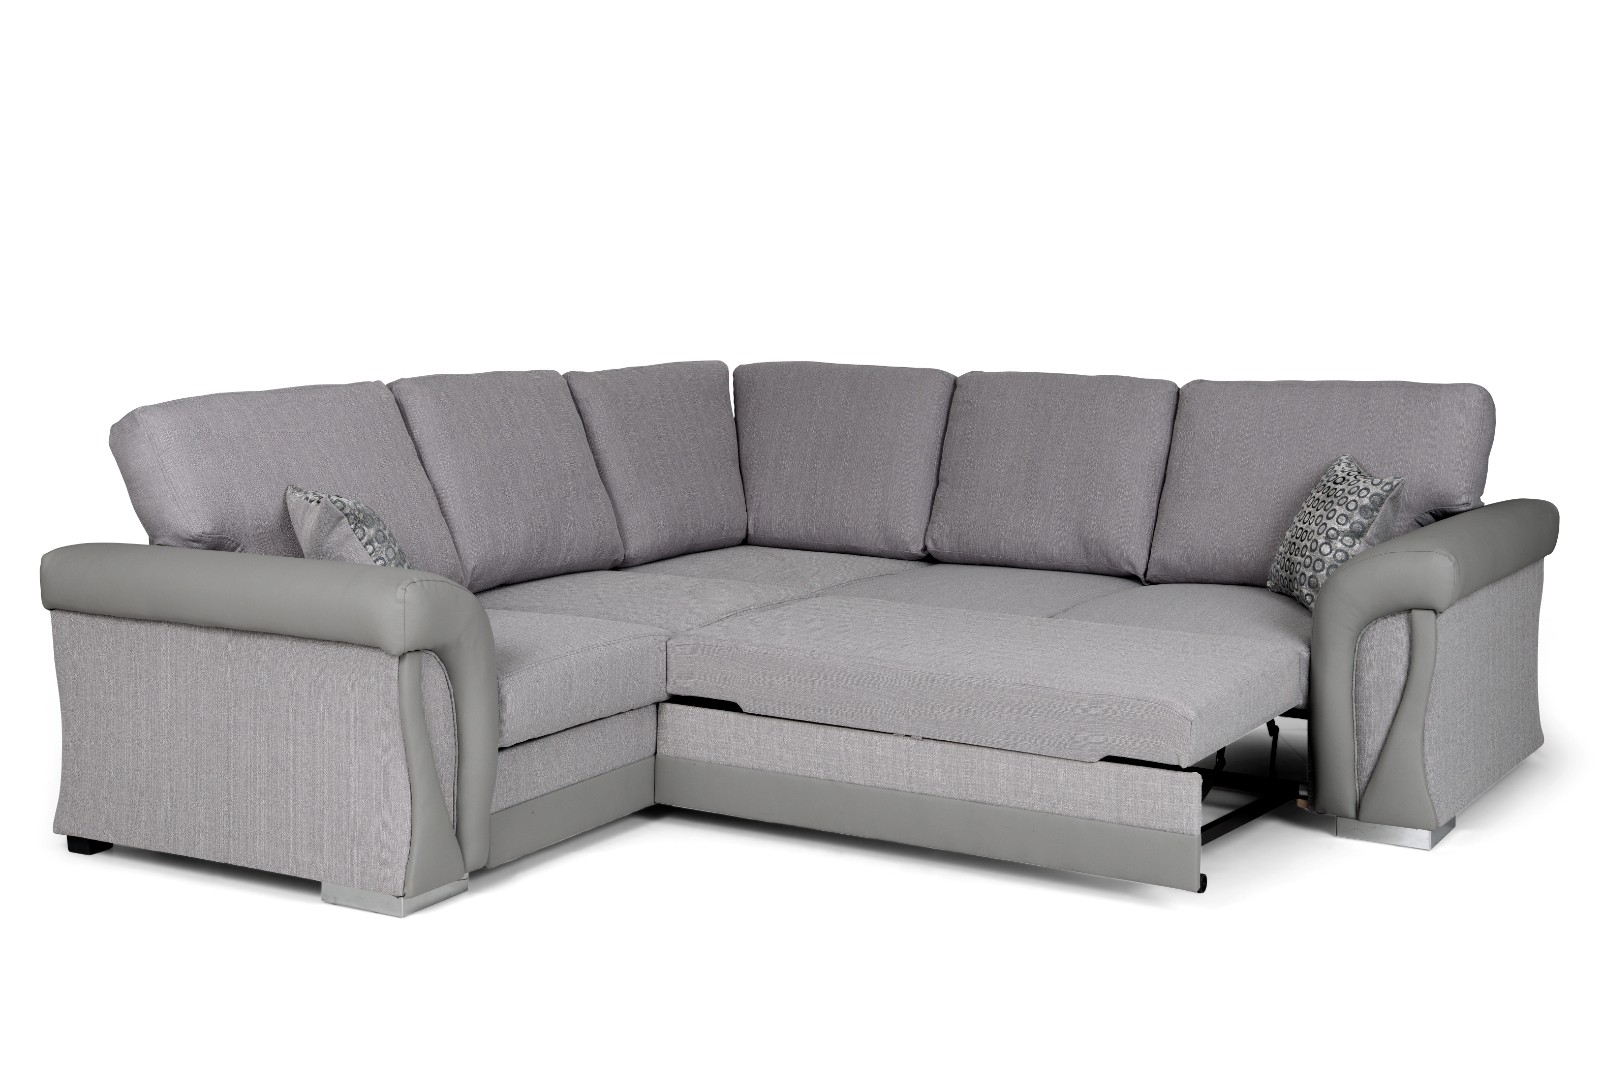 cheap corner sofa beds on finance